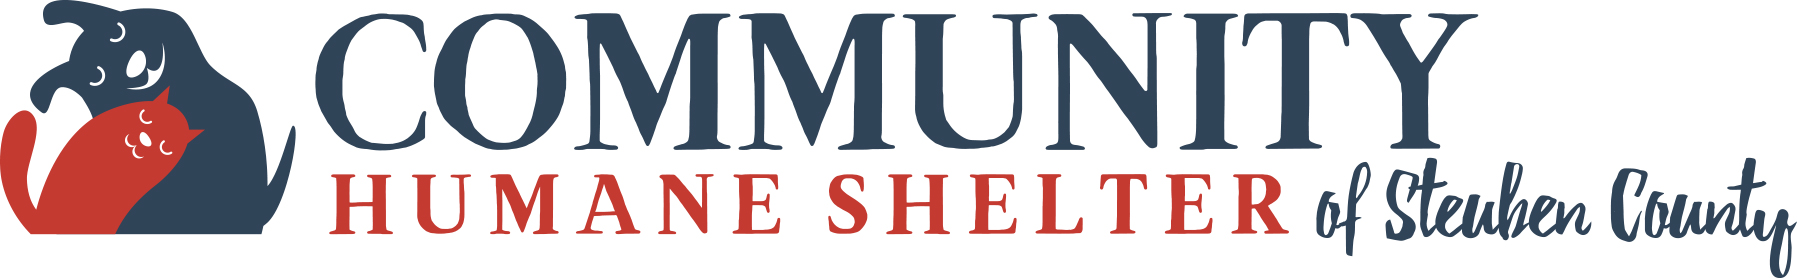 Community Humane Shelter of Steuben County logo